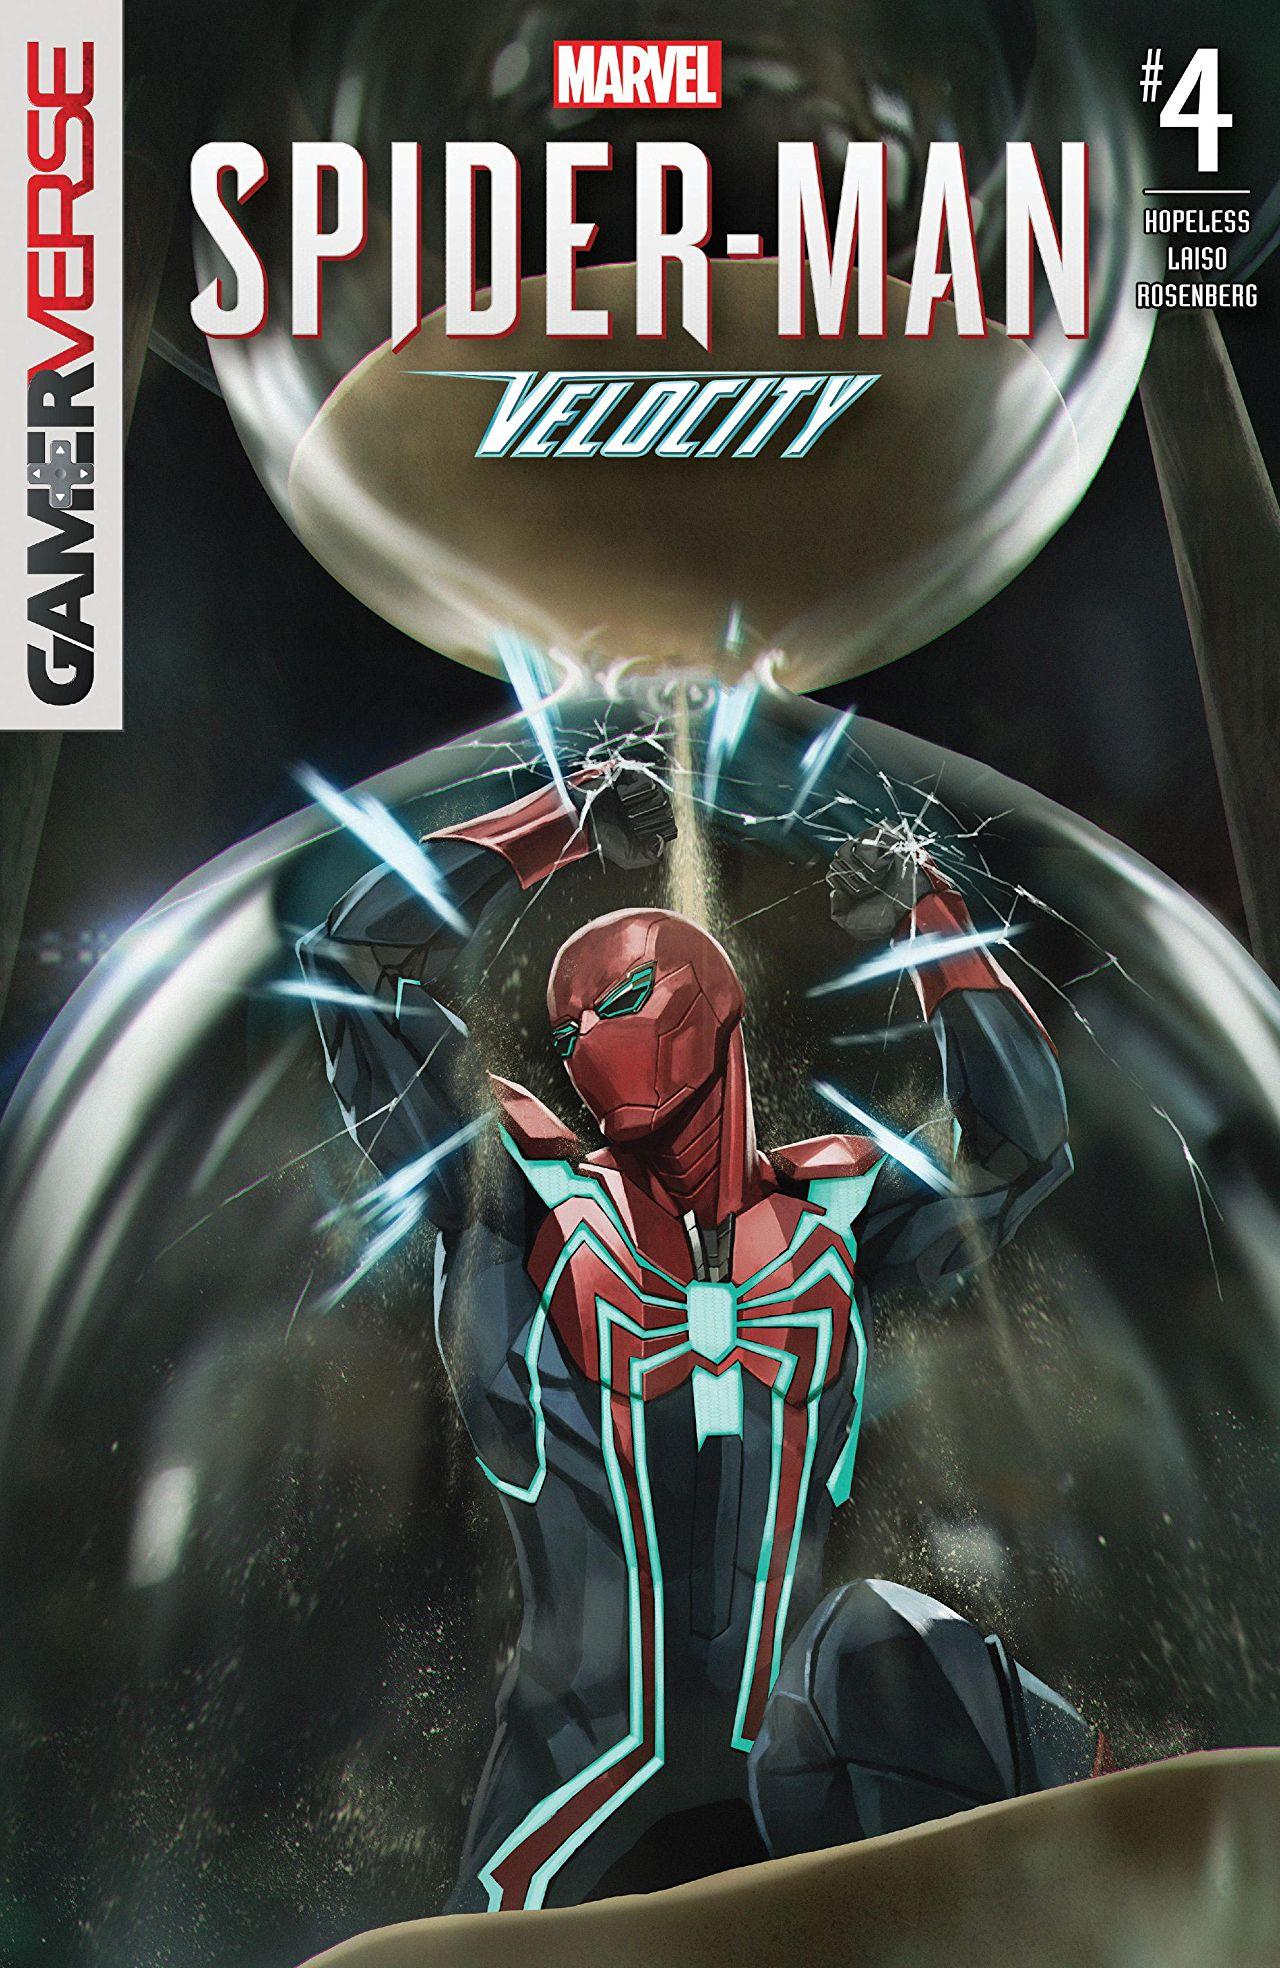 Marvel's Spider-Man: Velocity Vol. 1 #4